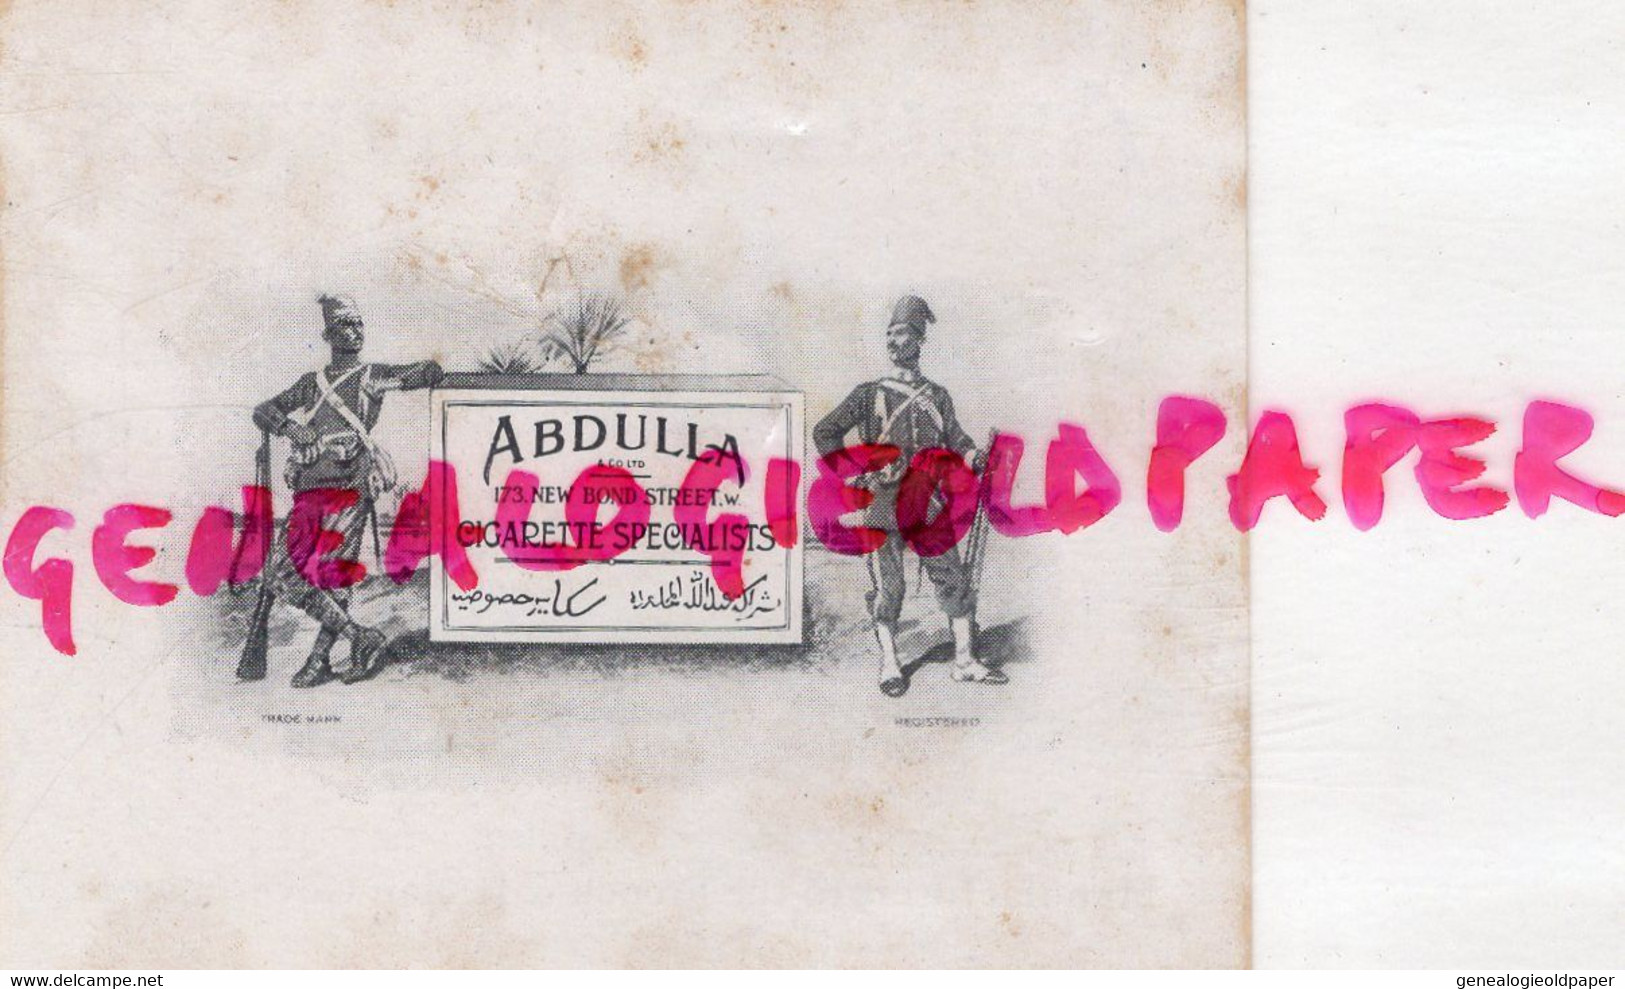 ANGLETERRE- CARTE ABDULLA CIGARETTE -173 NEW BOND STREET TIRAILLEUR AFRIQUE- ZIGARETTEN- TABAC- - Documenti